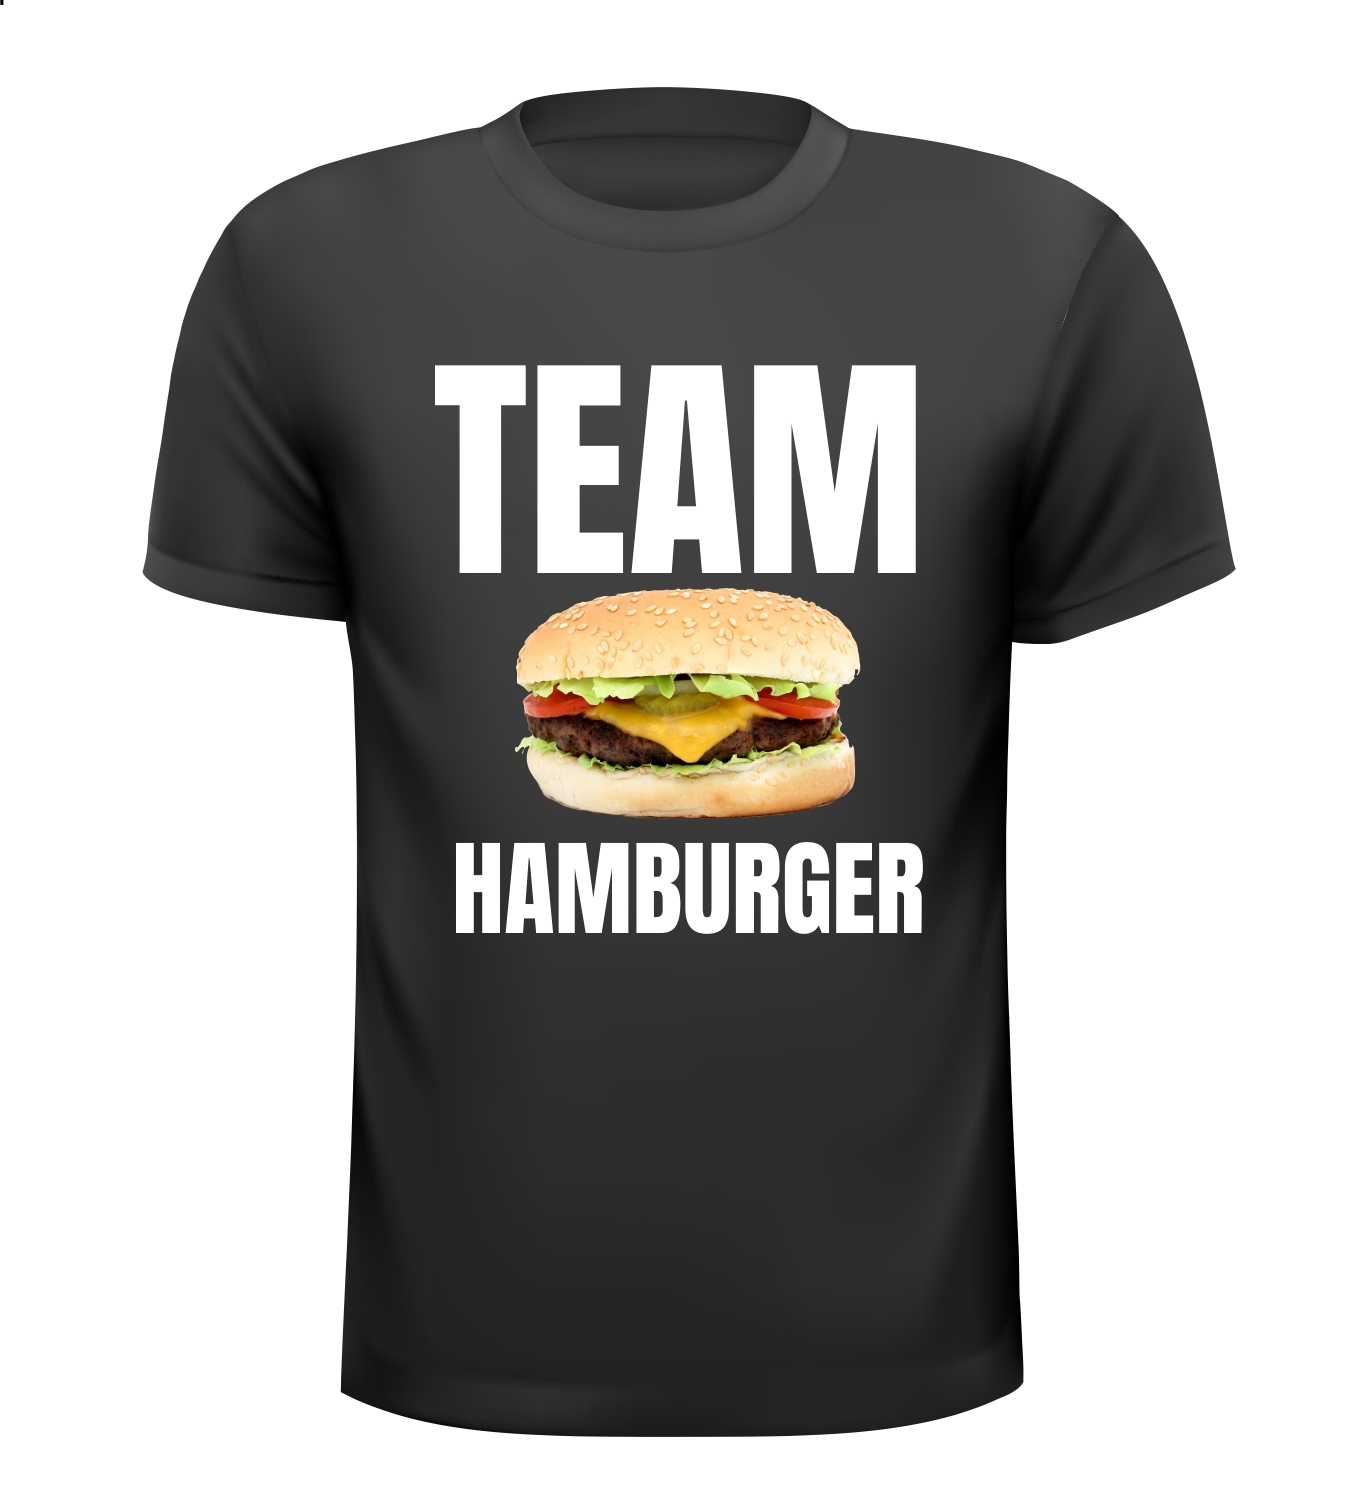 T-shirt voor het Team Hamburger. Het hamburger team